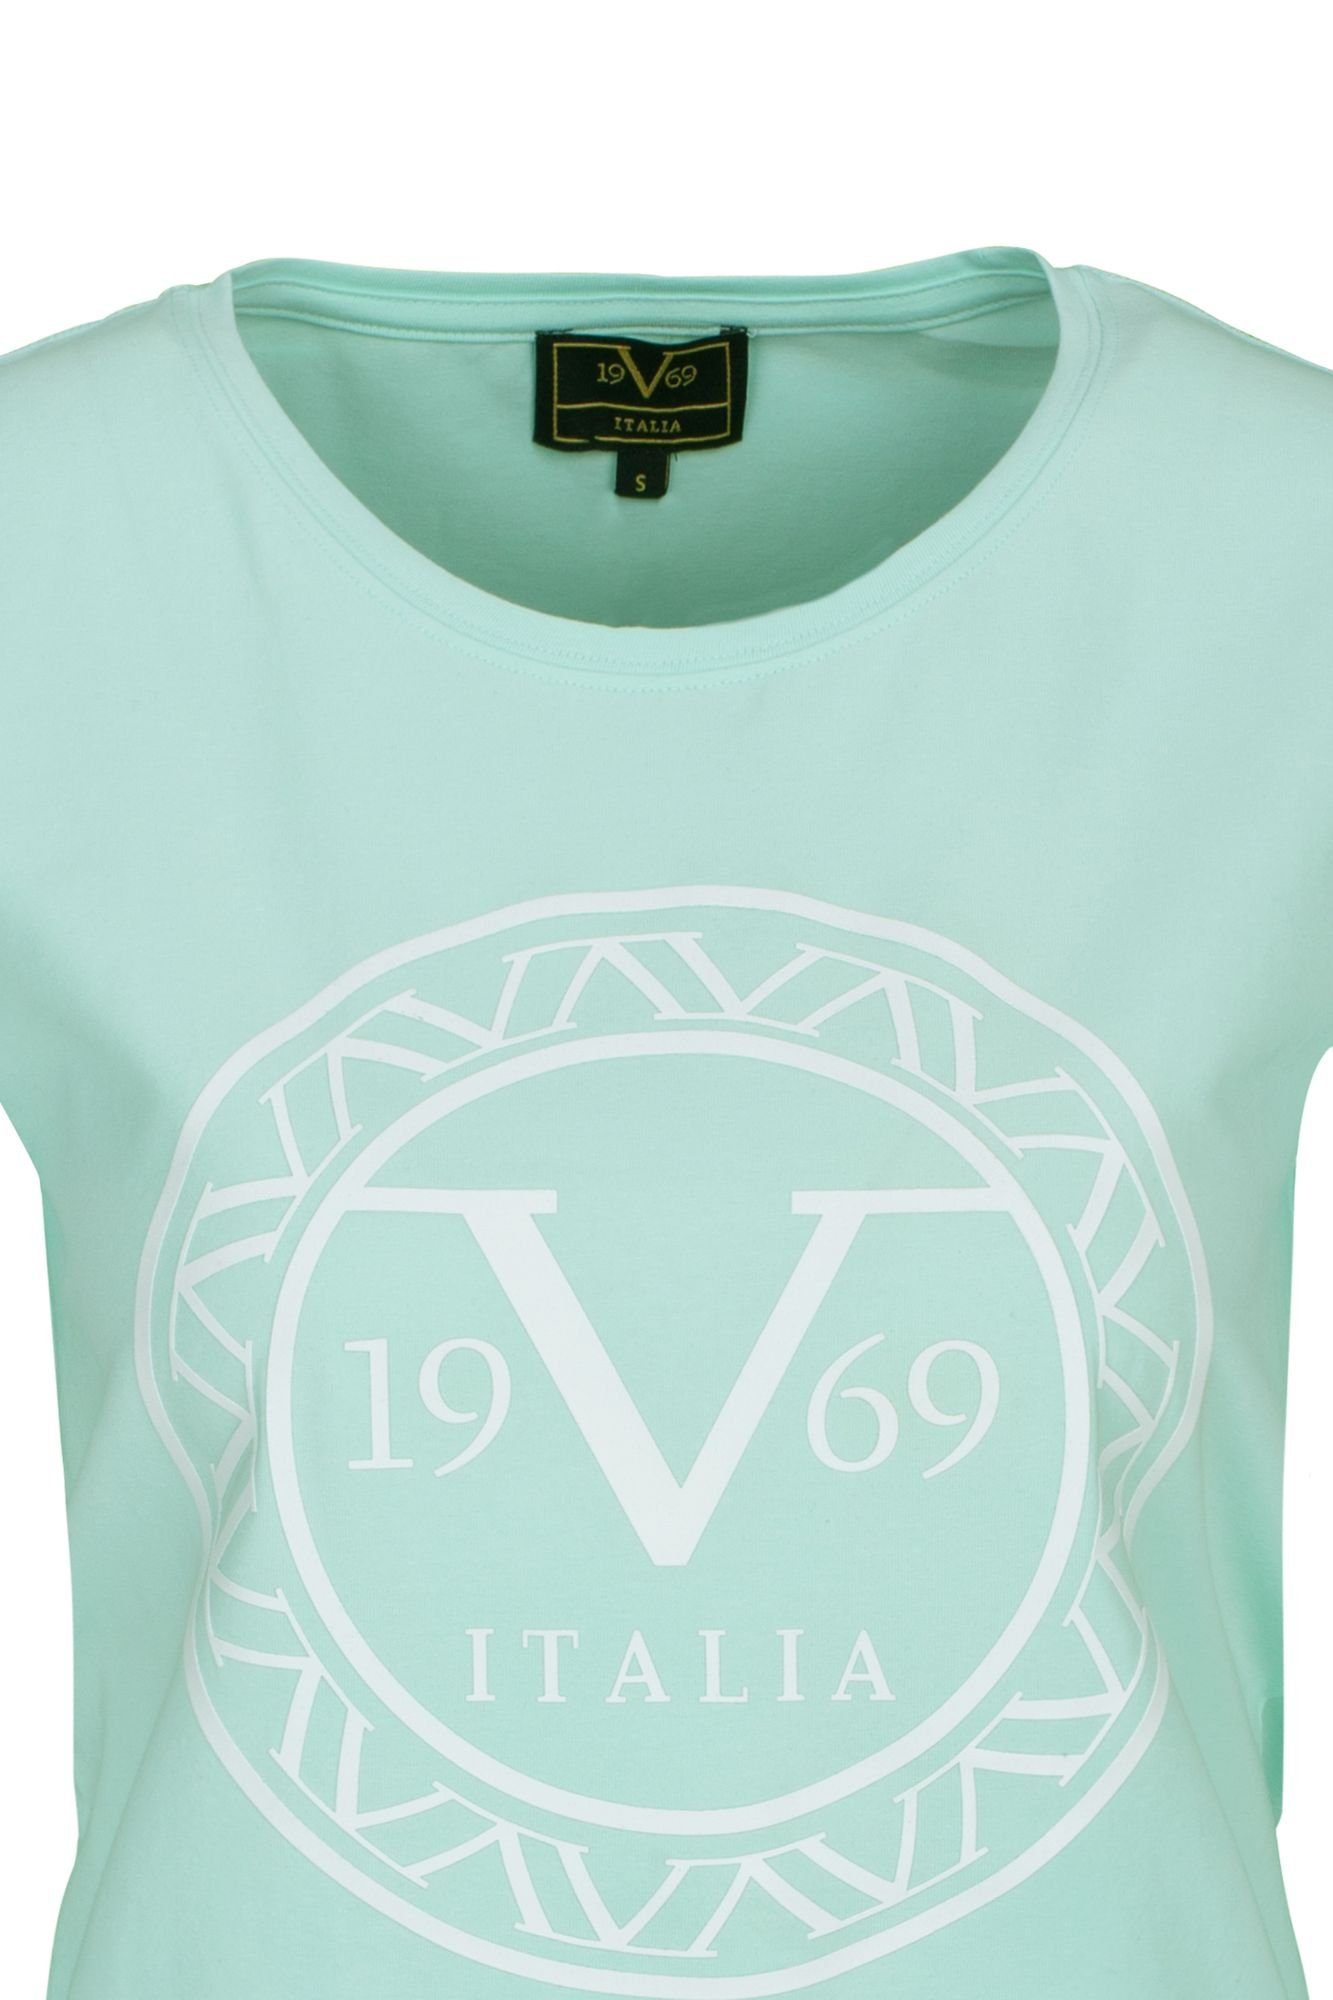 Italia by T-Shirt Irina 19V69 Versace